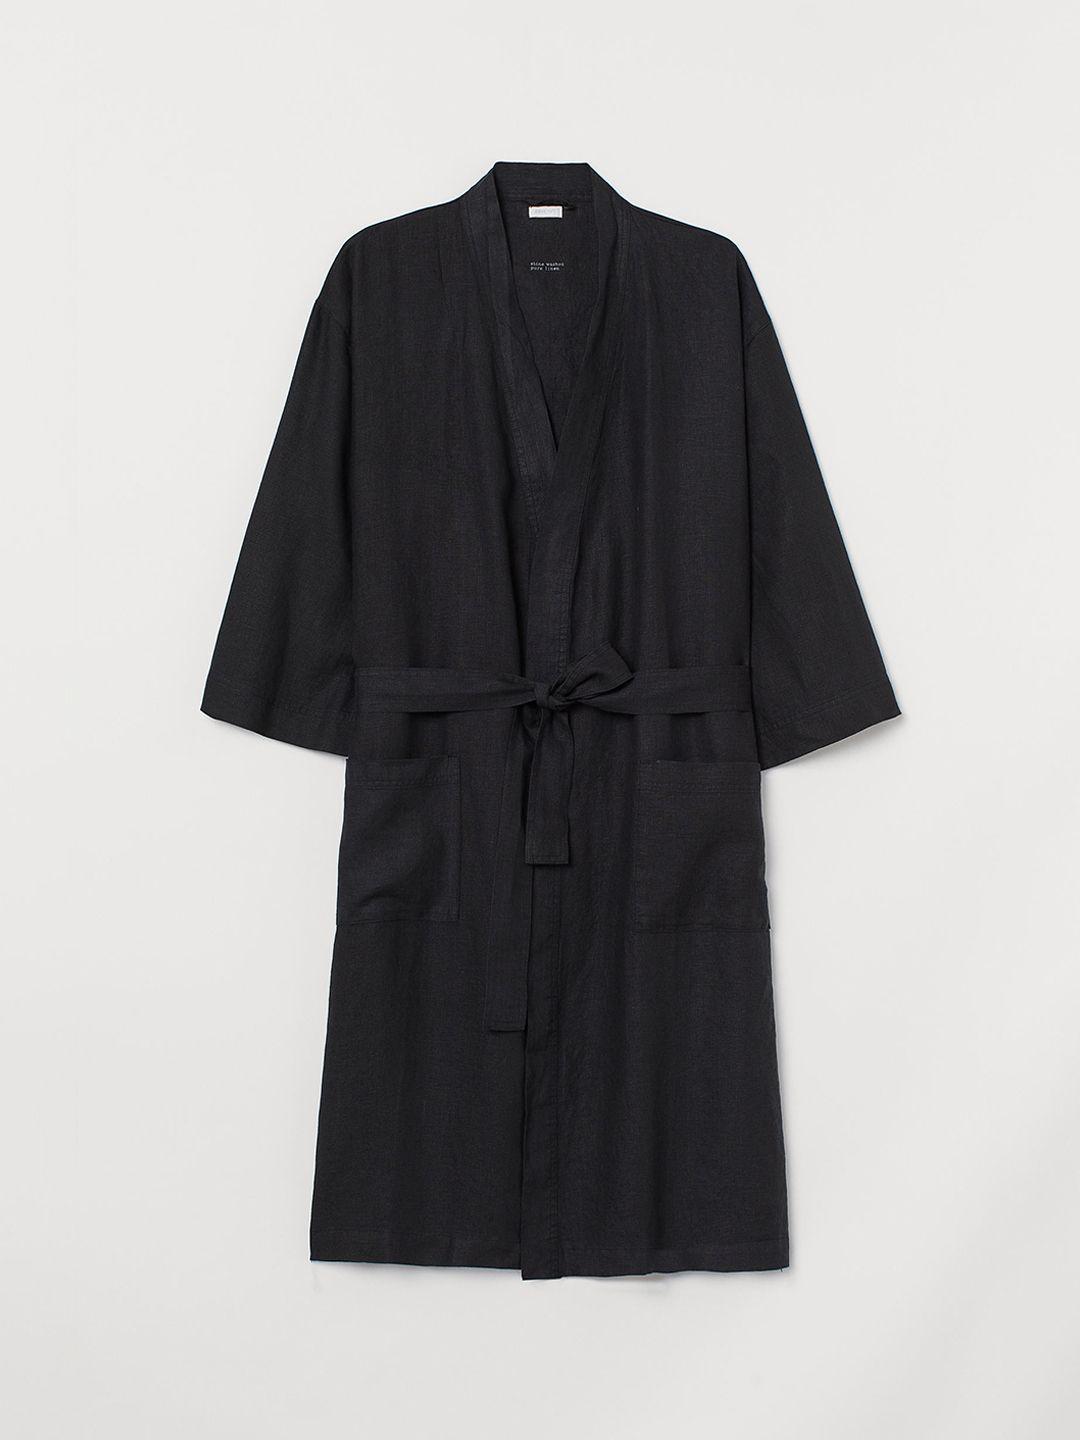 h&m unisex black washed linen dressing gown